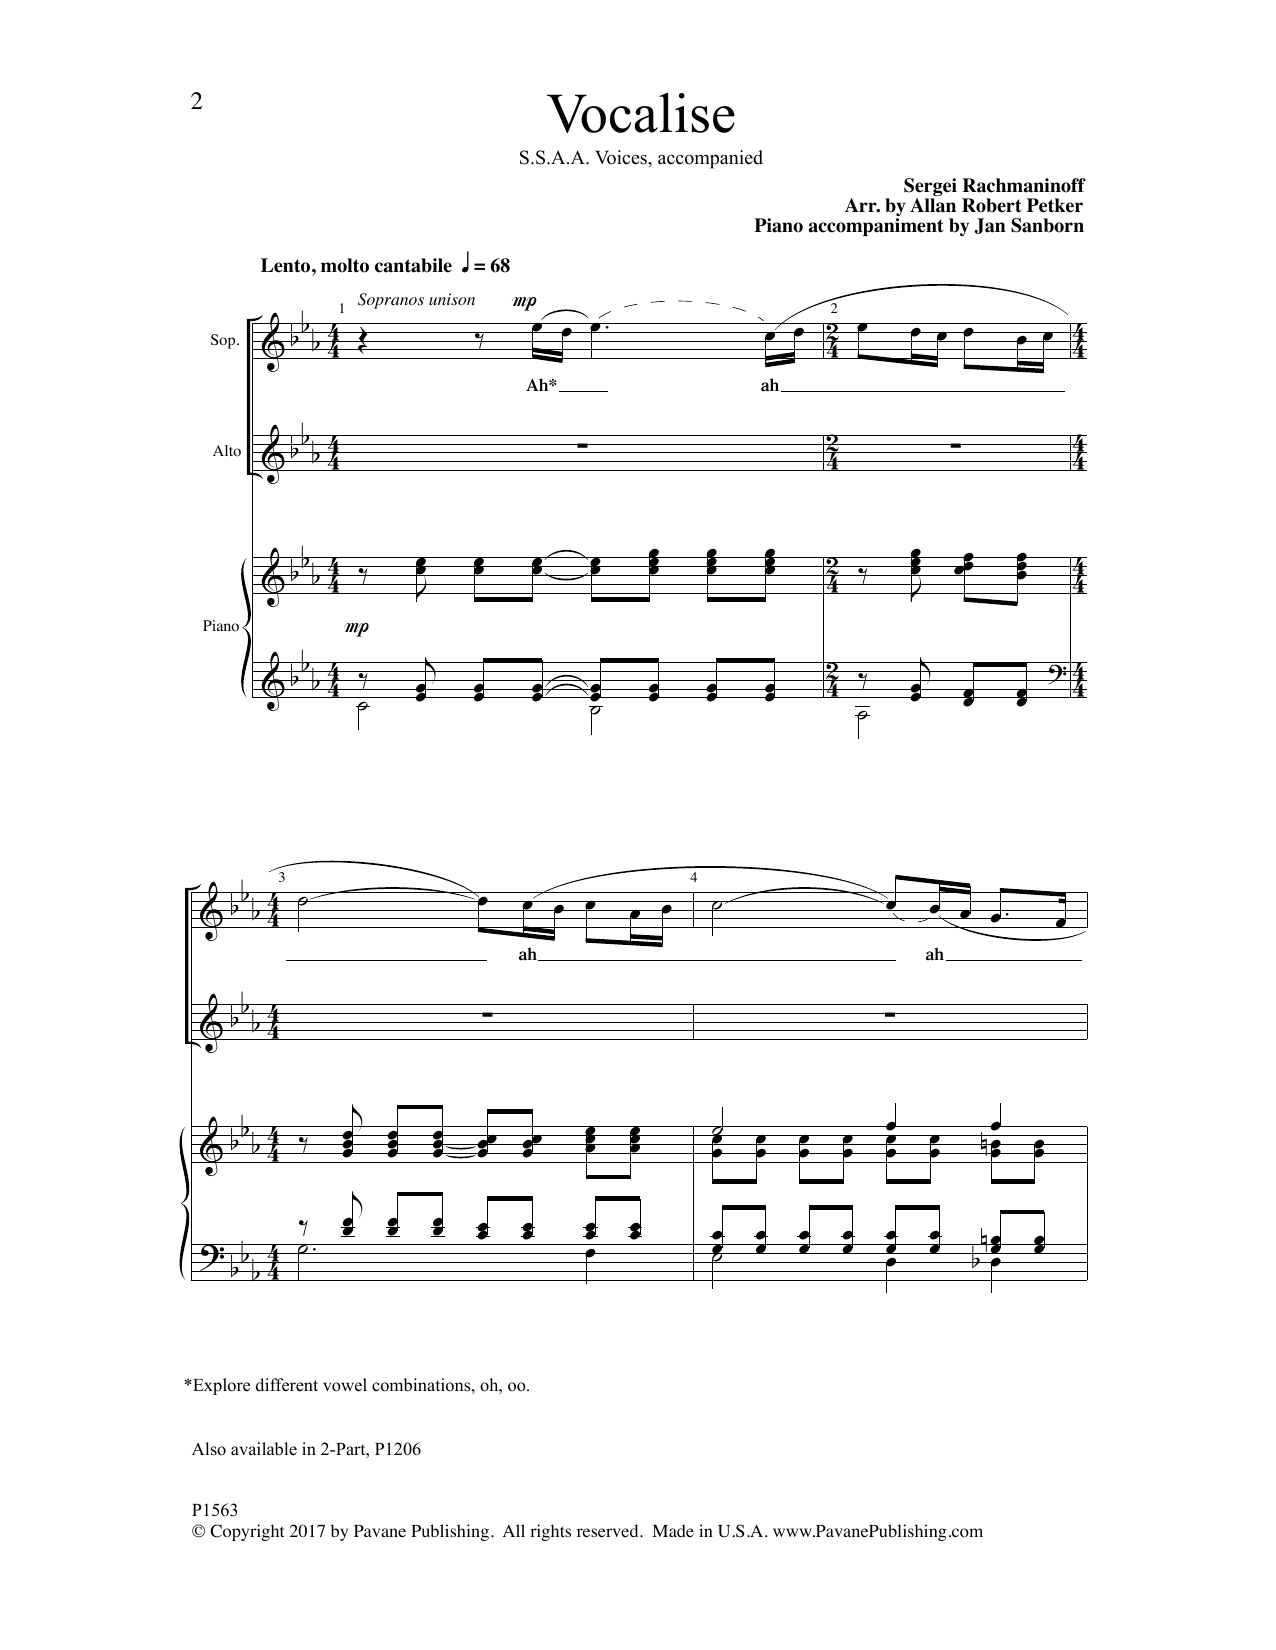 Allan Robert Petker Vocalise Sheet Music Notes & Chords for Choral - Download or Print PDF